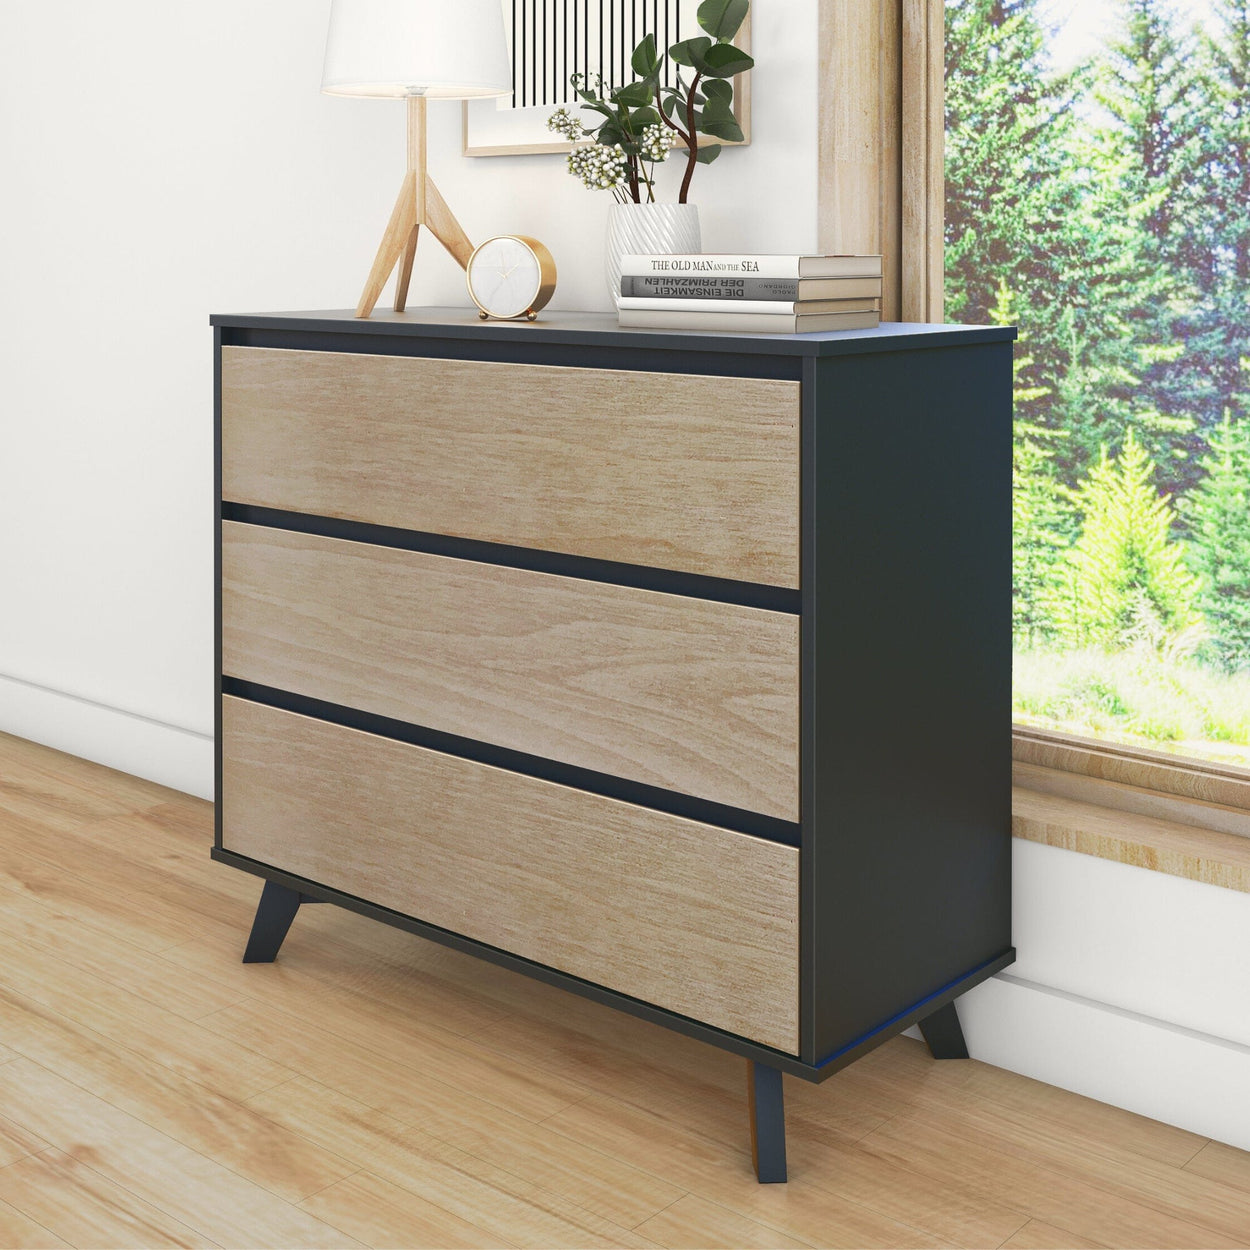 210003-272 : Furniture Scandinavian 3-Drawer Dresser, Black/Blonde